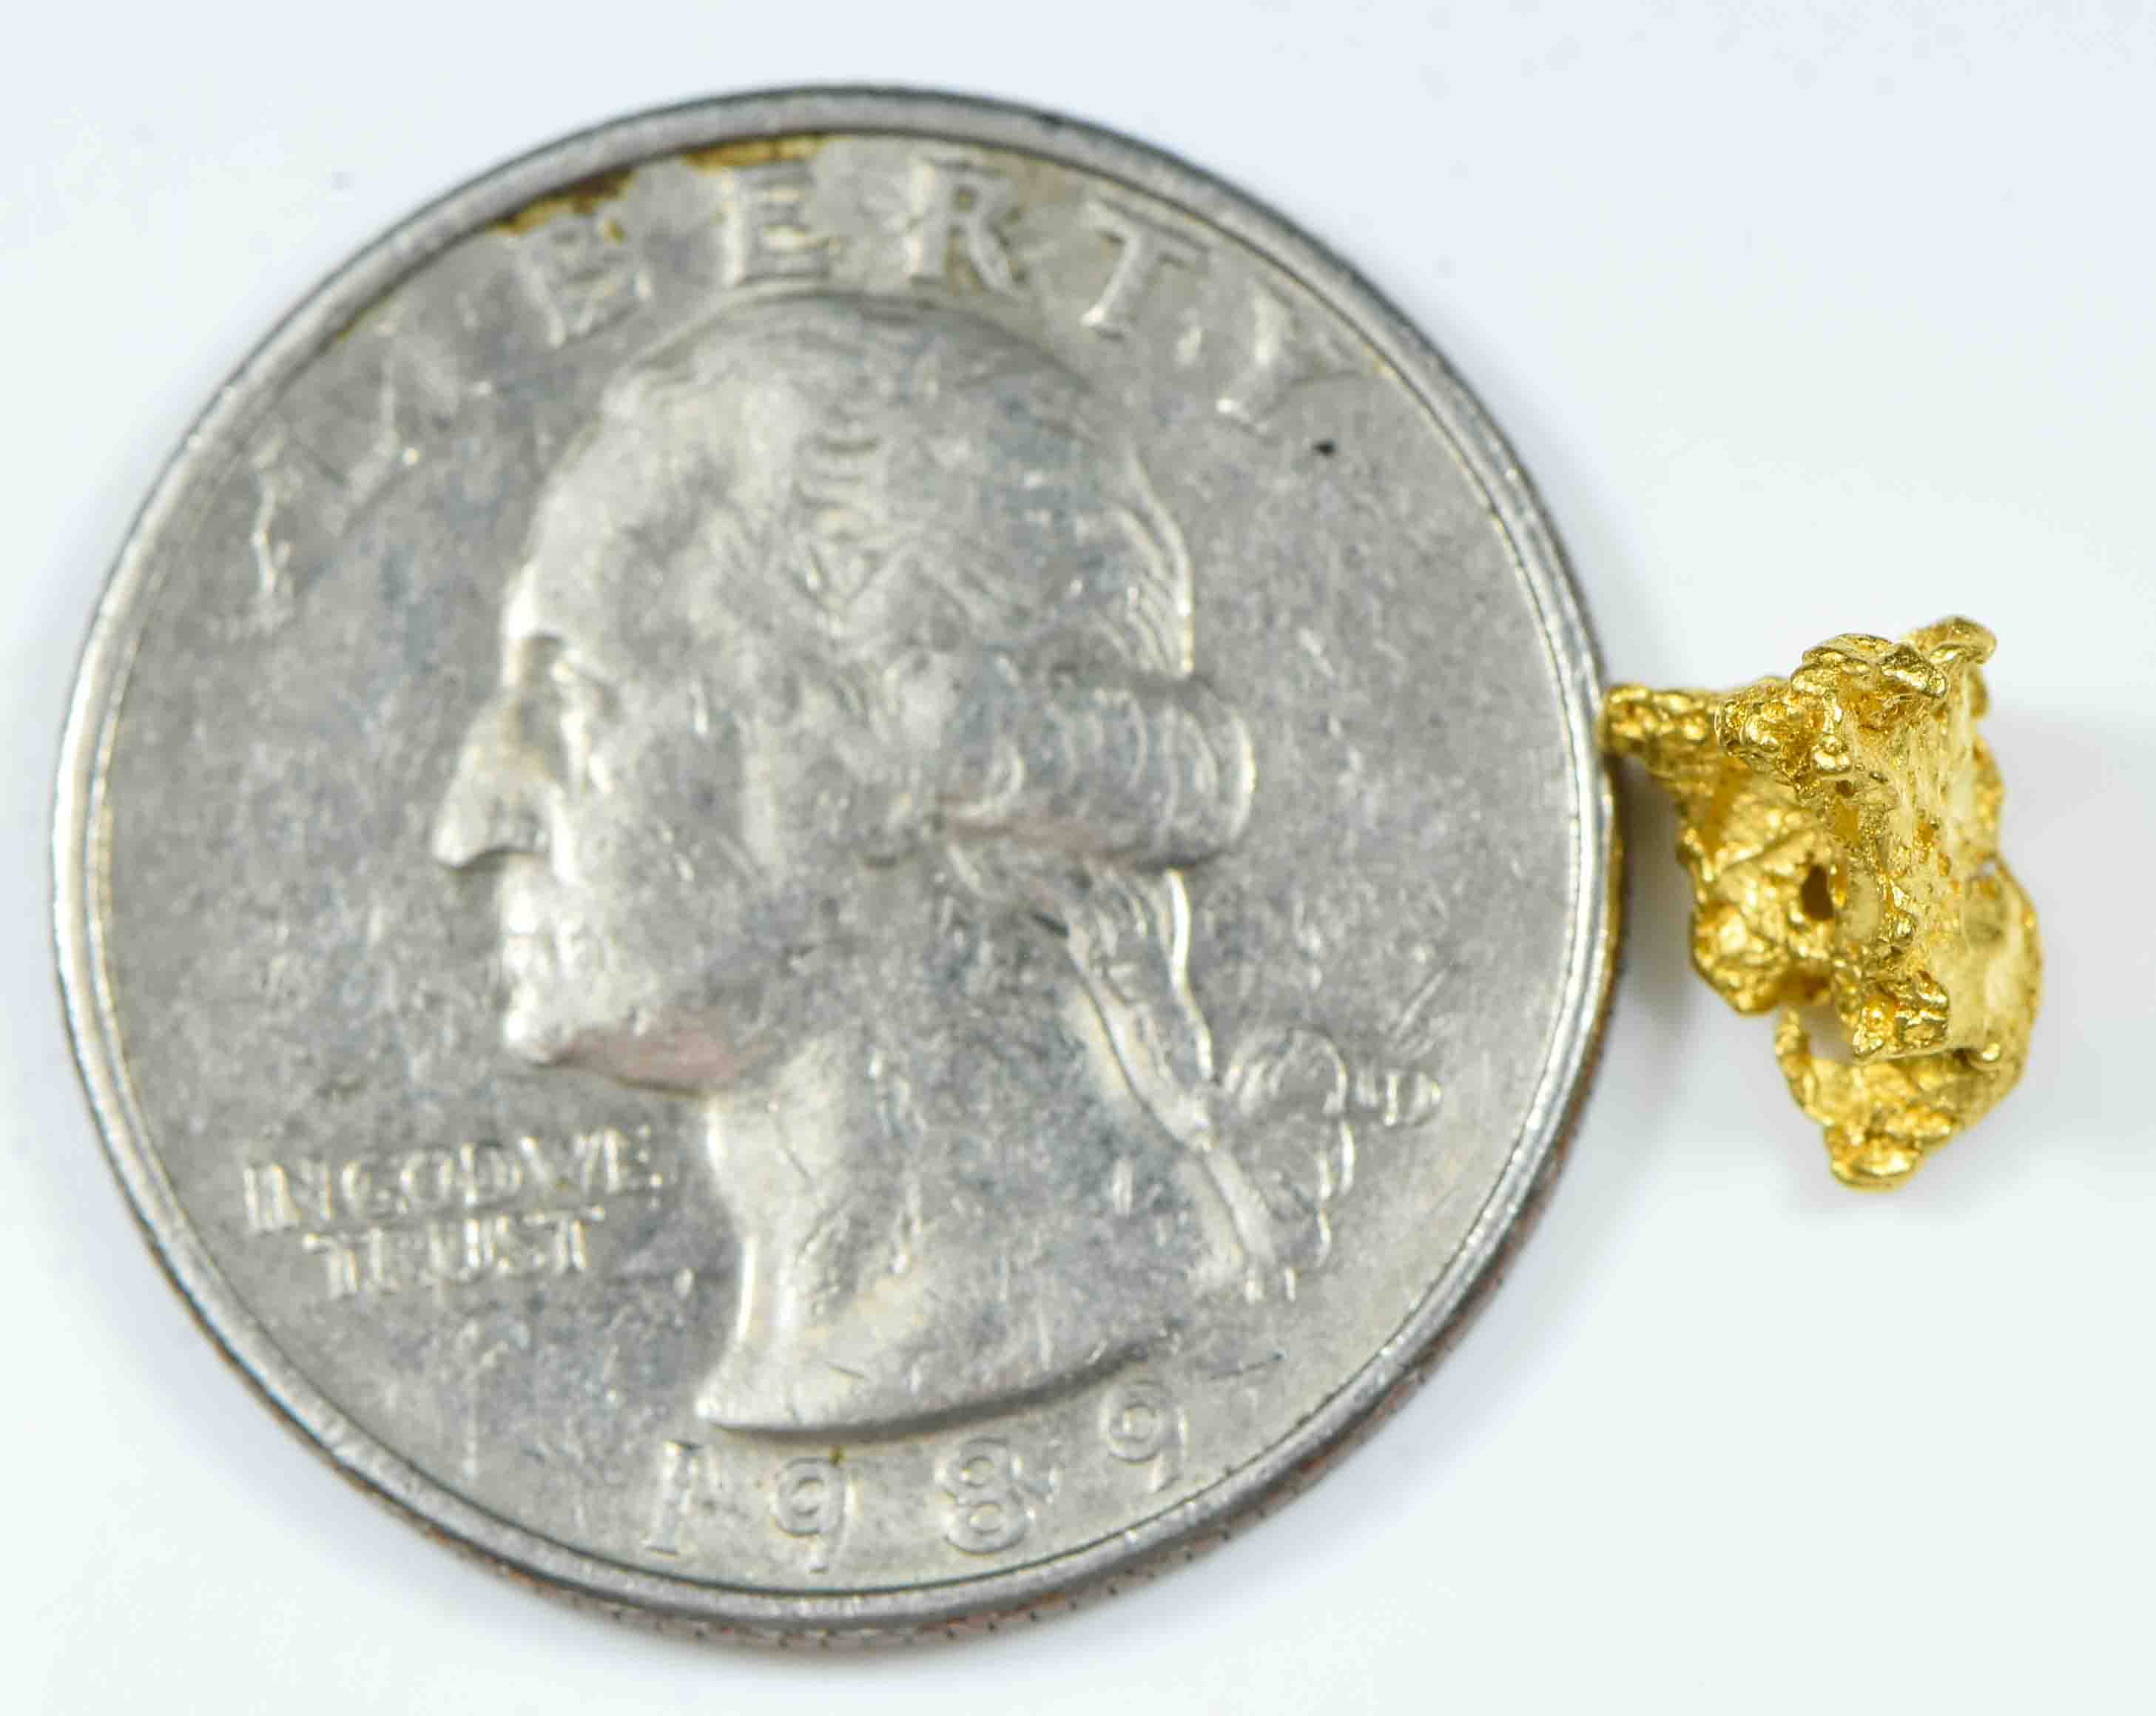 #737 Natural Gold Nugget Australian 1.26 Grams Genuine